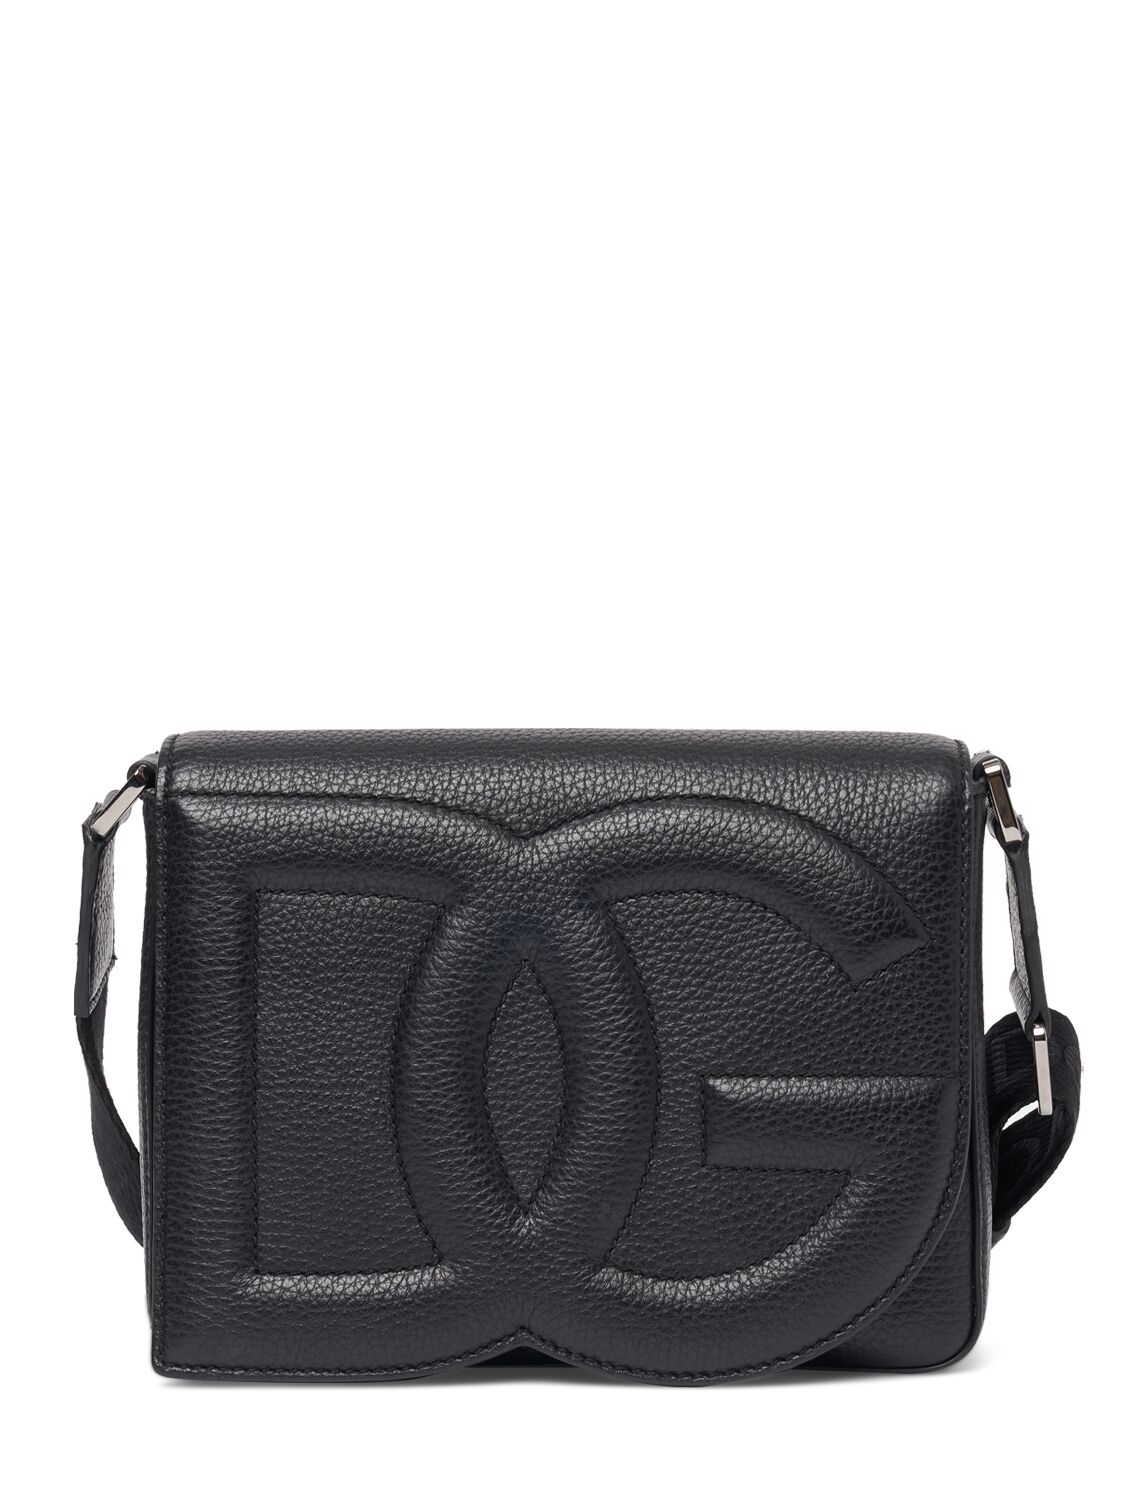 Dolce & Gabbana Dg Embossed Logo Crossbody Bag In Black